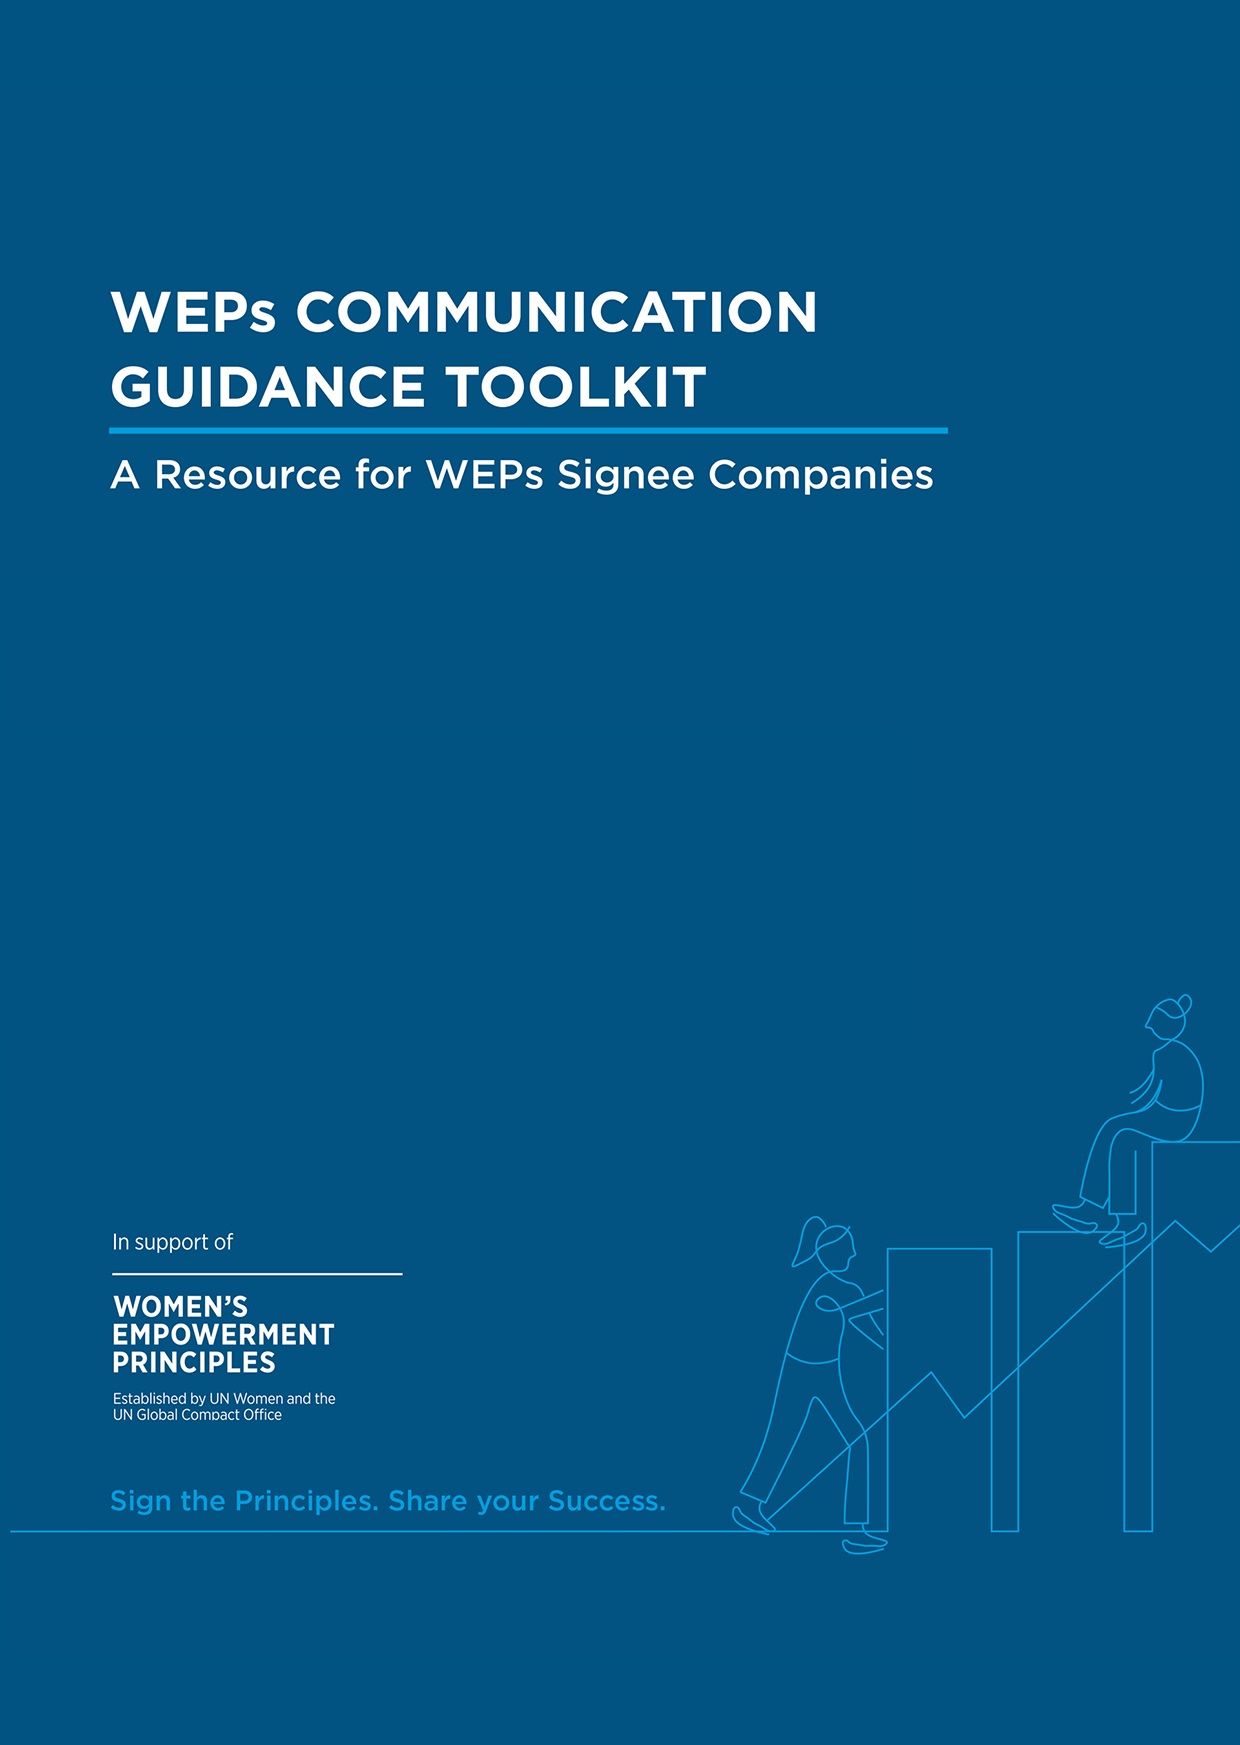 WEPs Communication Guidance Toolkit. Photo: UN Women